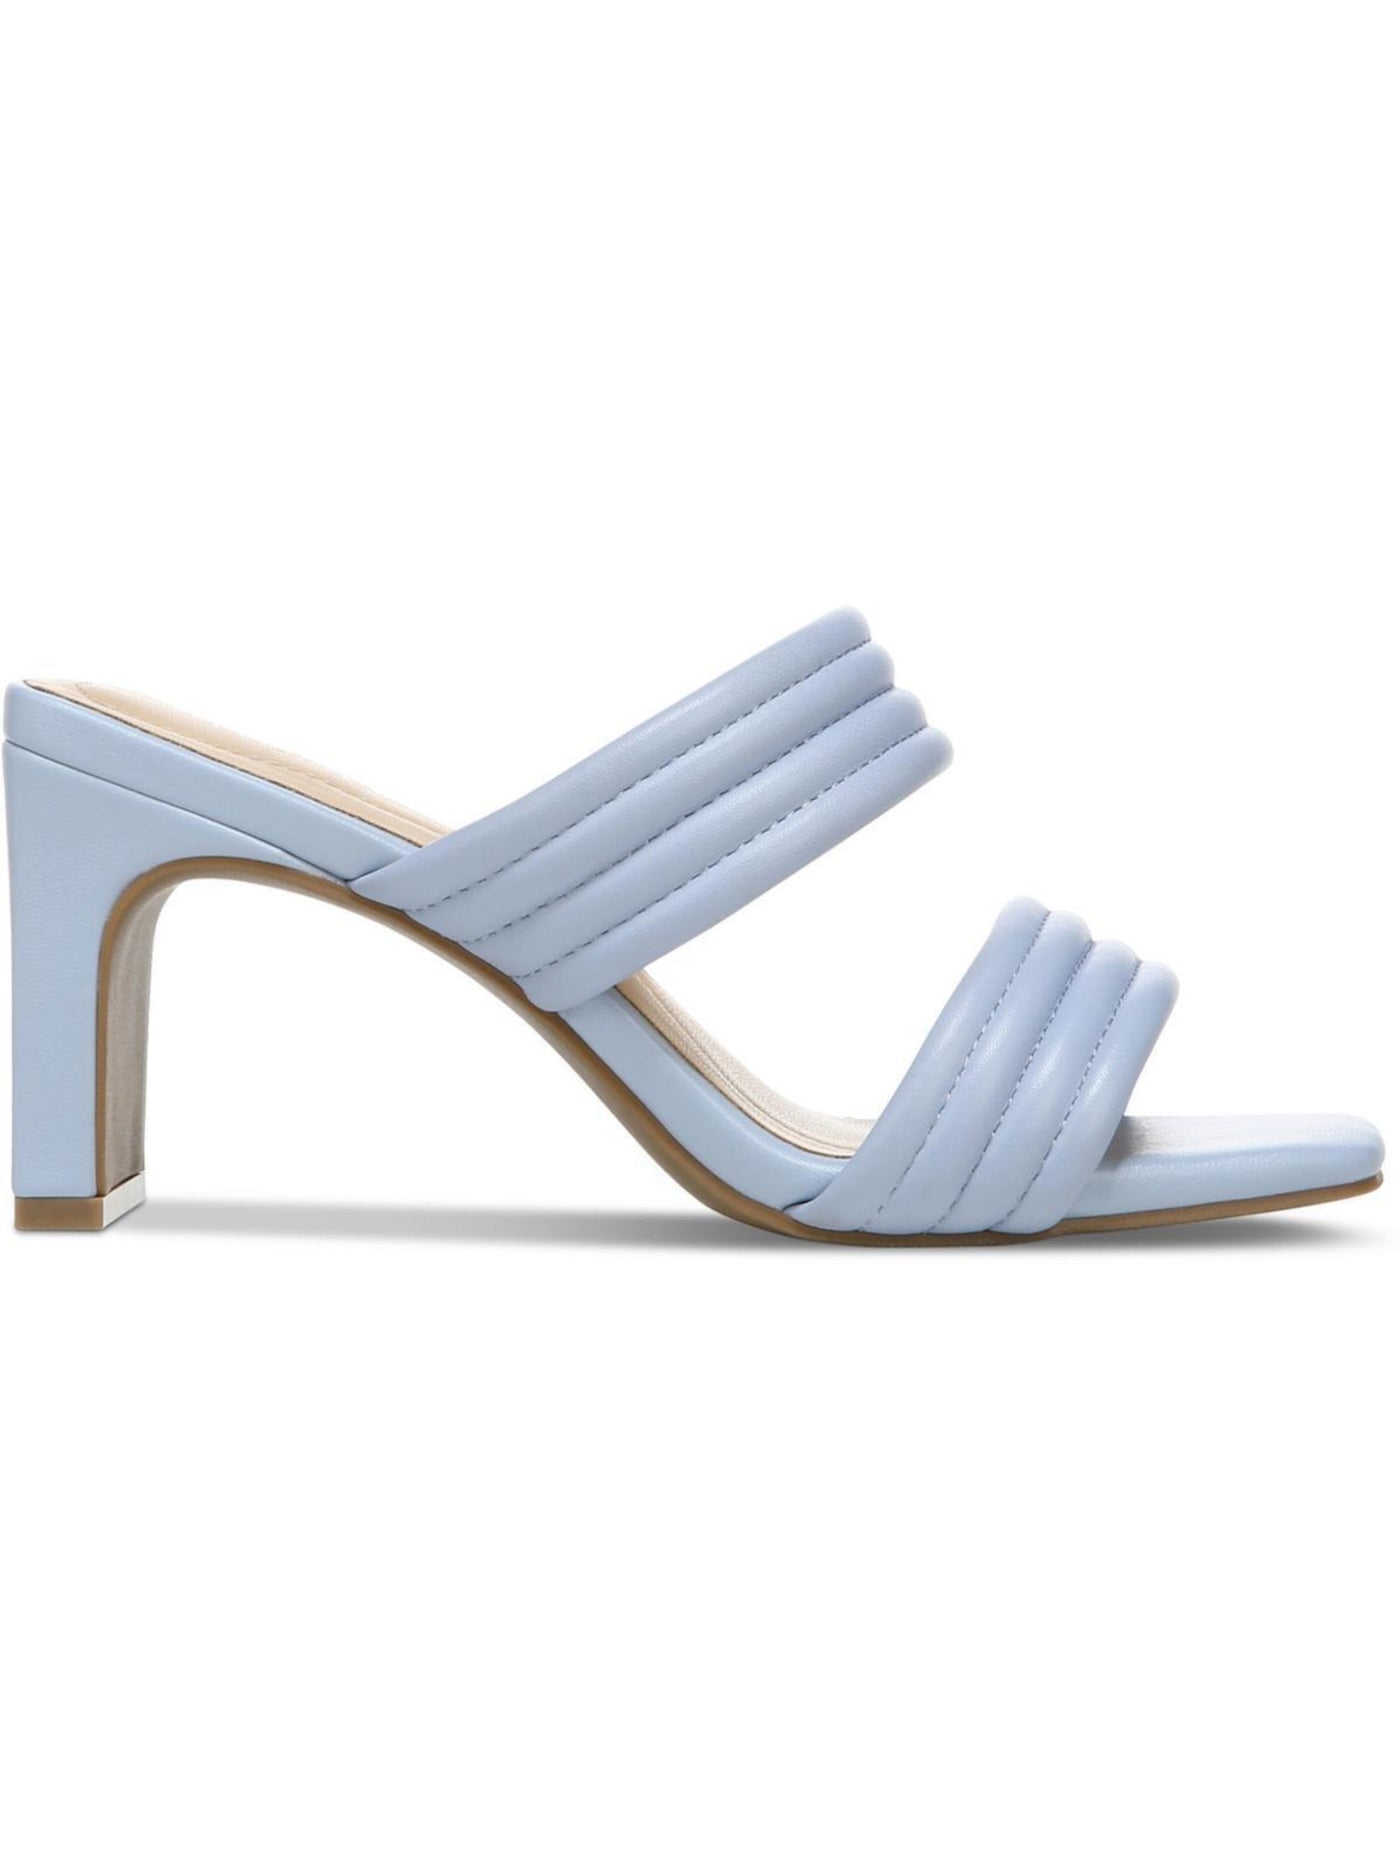 ALFANI Womens Blue Cushioned Quilted Stantonn Square Toe Block Heel Slip On Dress Sandals Shoes 9.5 M